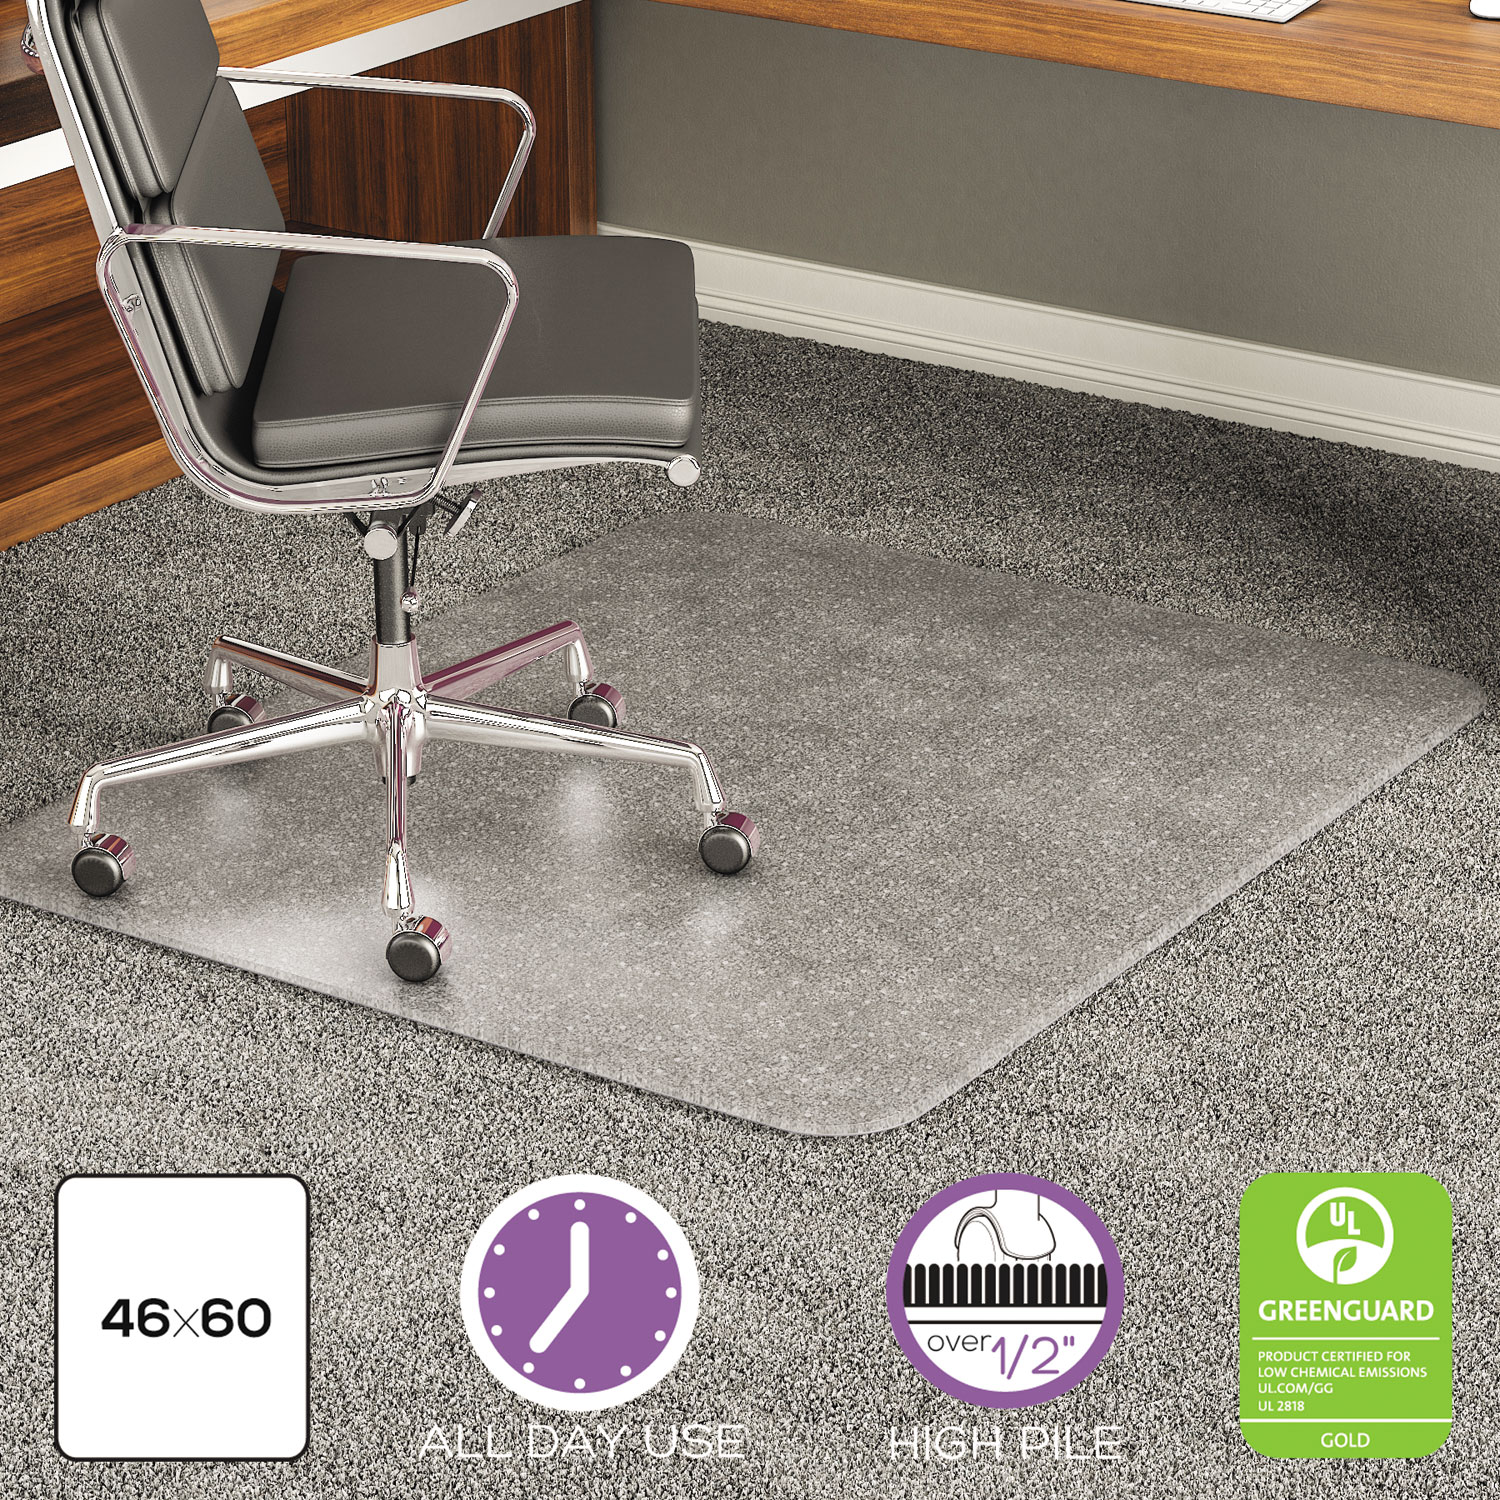  deflecto CM17443F ExecuMat All Day Use Chair Mat for High Pile Carpet, 46 x 60, Rectangular, Clear (DEFCM17443F) 